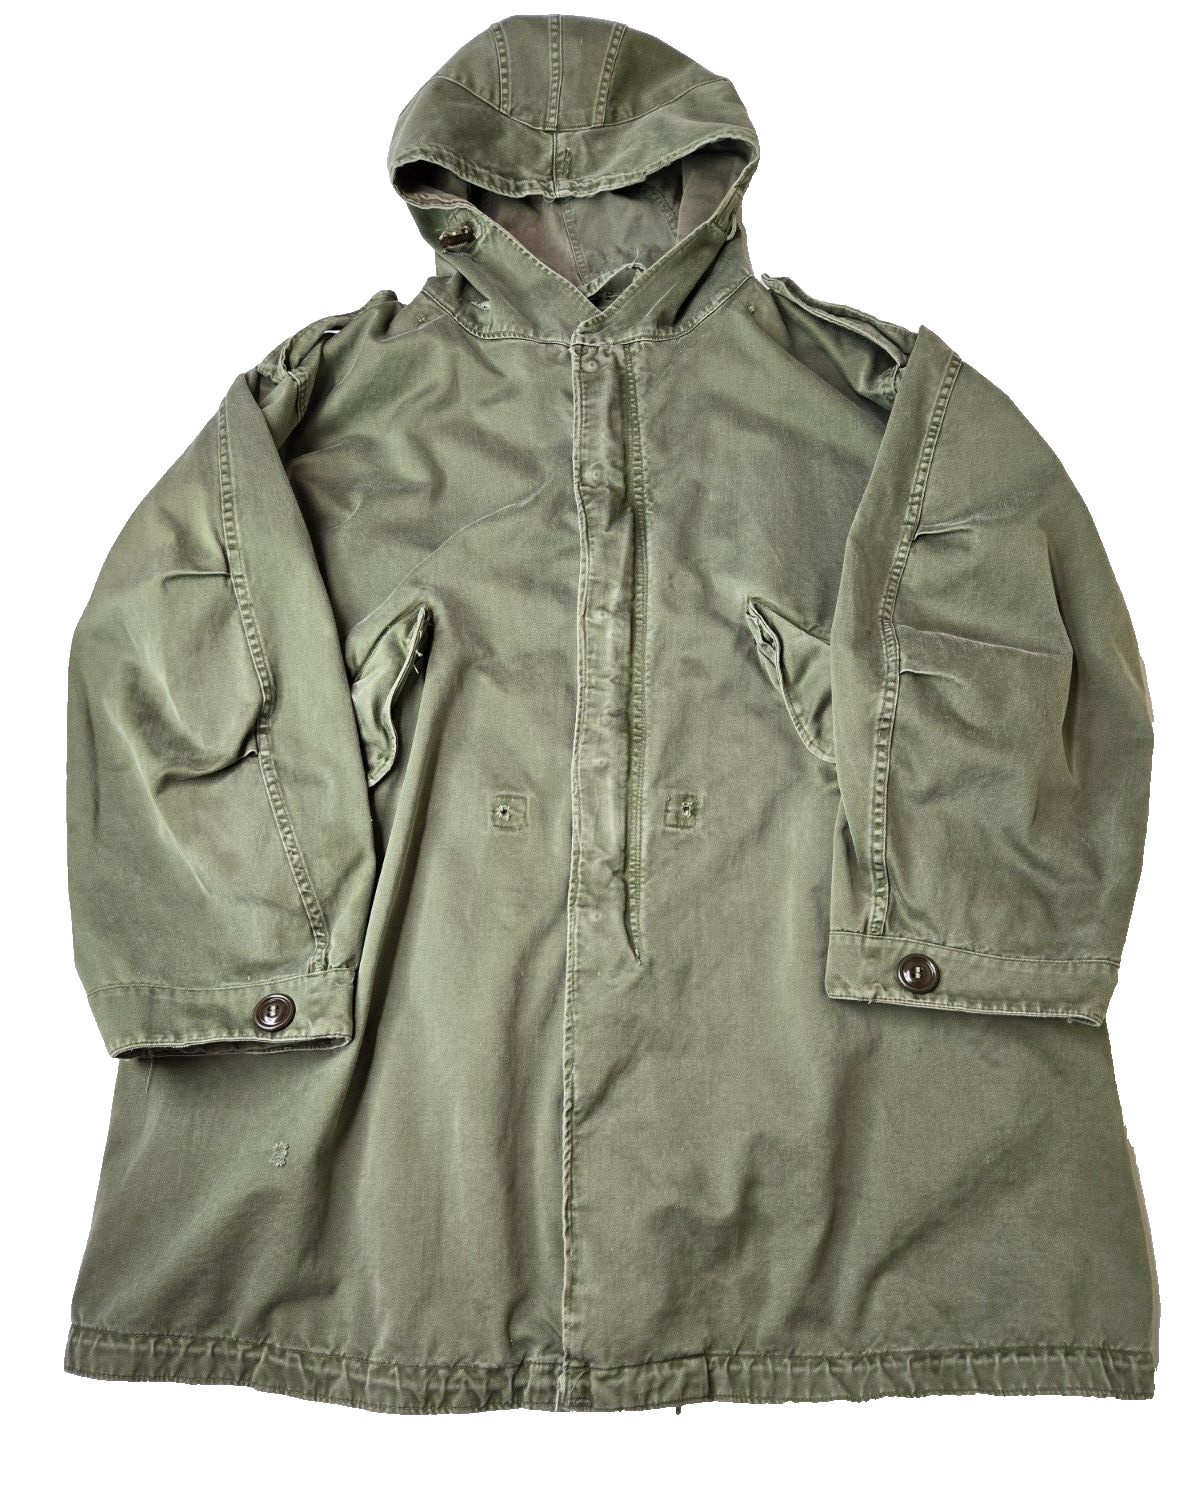 US Army Vintage Military 1951 Korean War Fishtail Parka Jacket Shell Men Large L